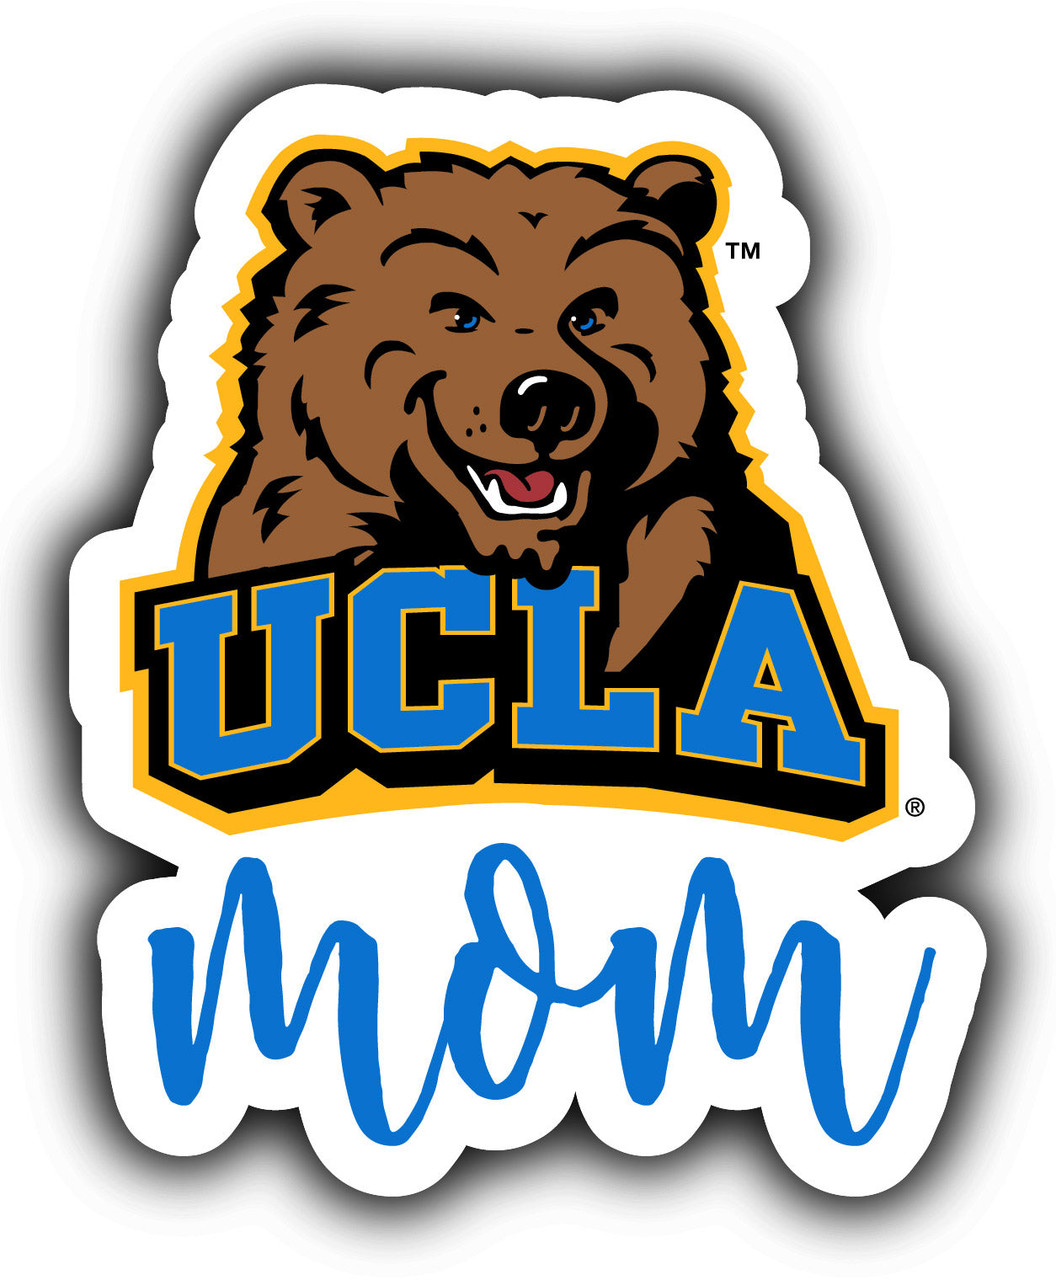 UCLA Bruins Proud Mom 4-Inch Die Cut Decal